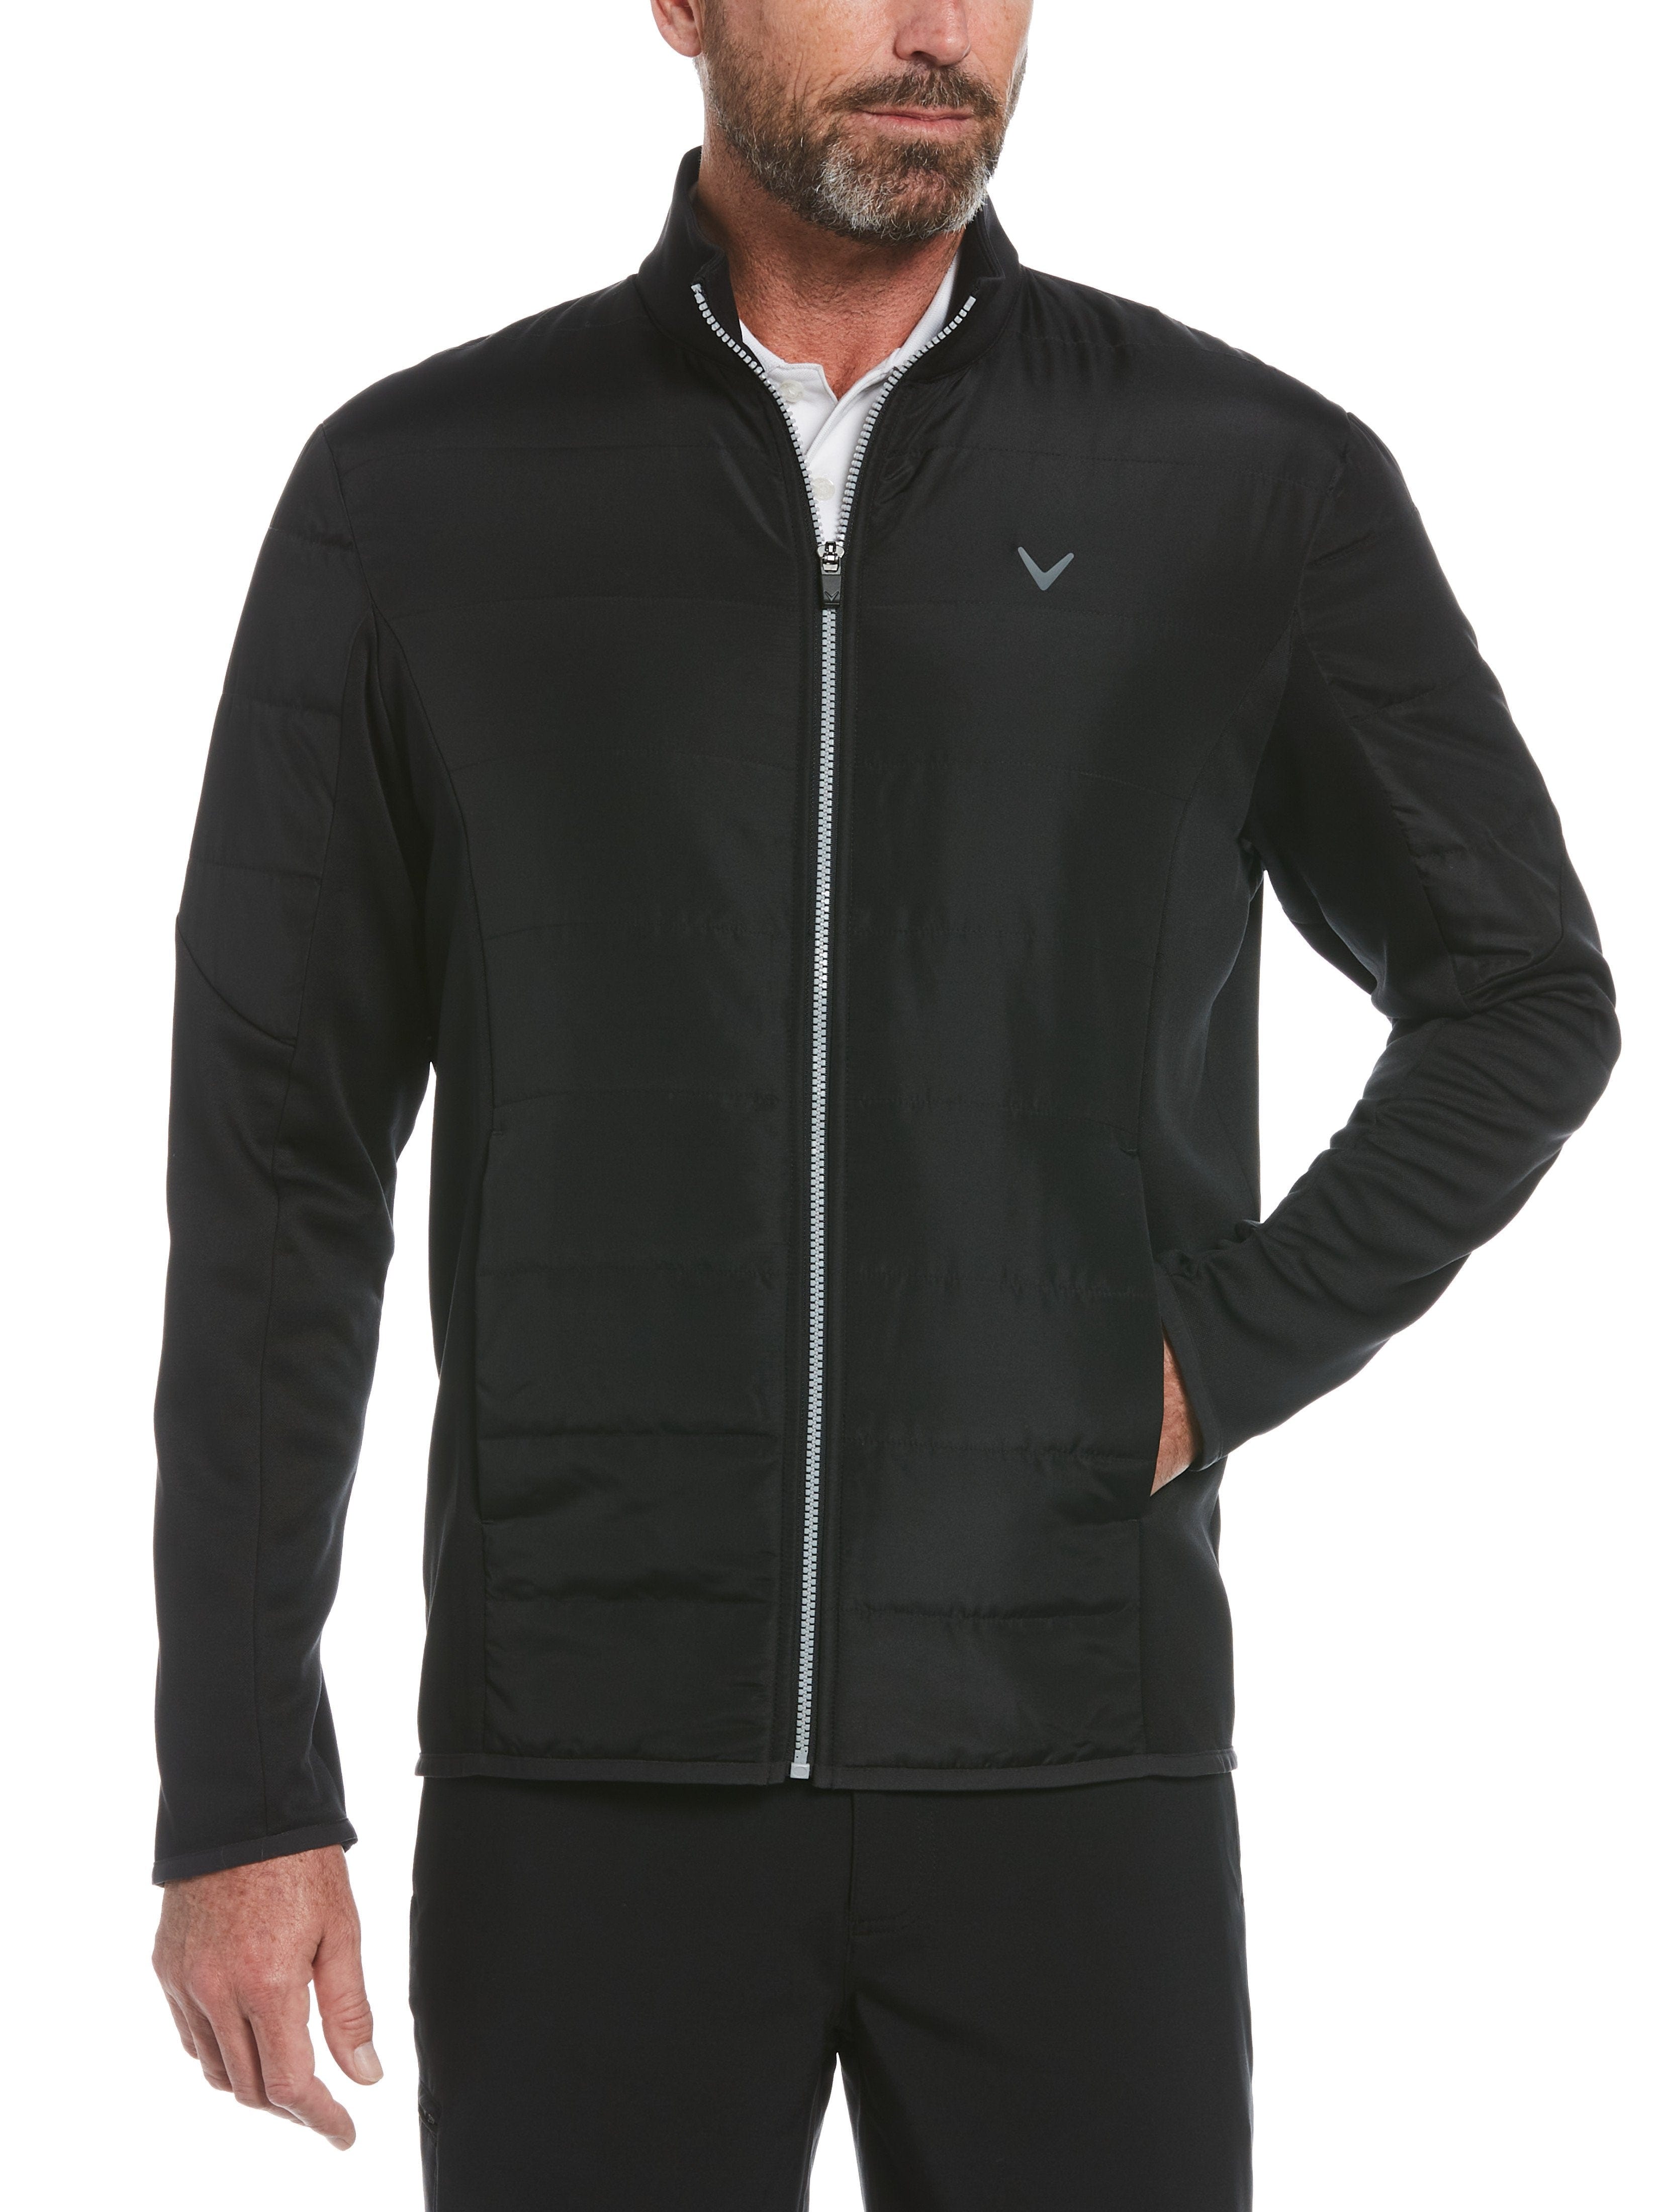 Callaway Apparel Mens Hybrid Performance Puffer Jacket Top, Size 2XL, Black, 100% Polyester | Golf Apparel Shop